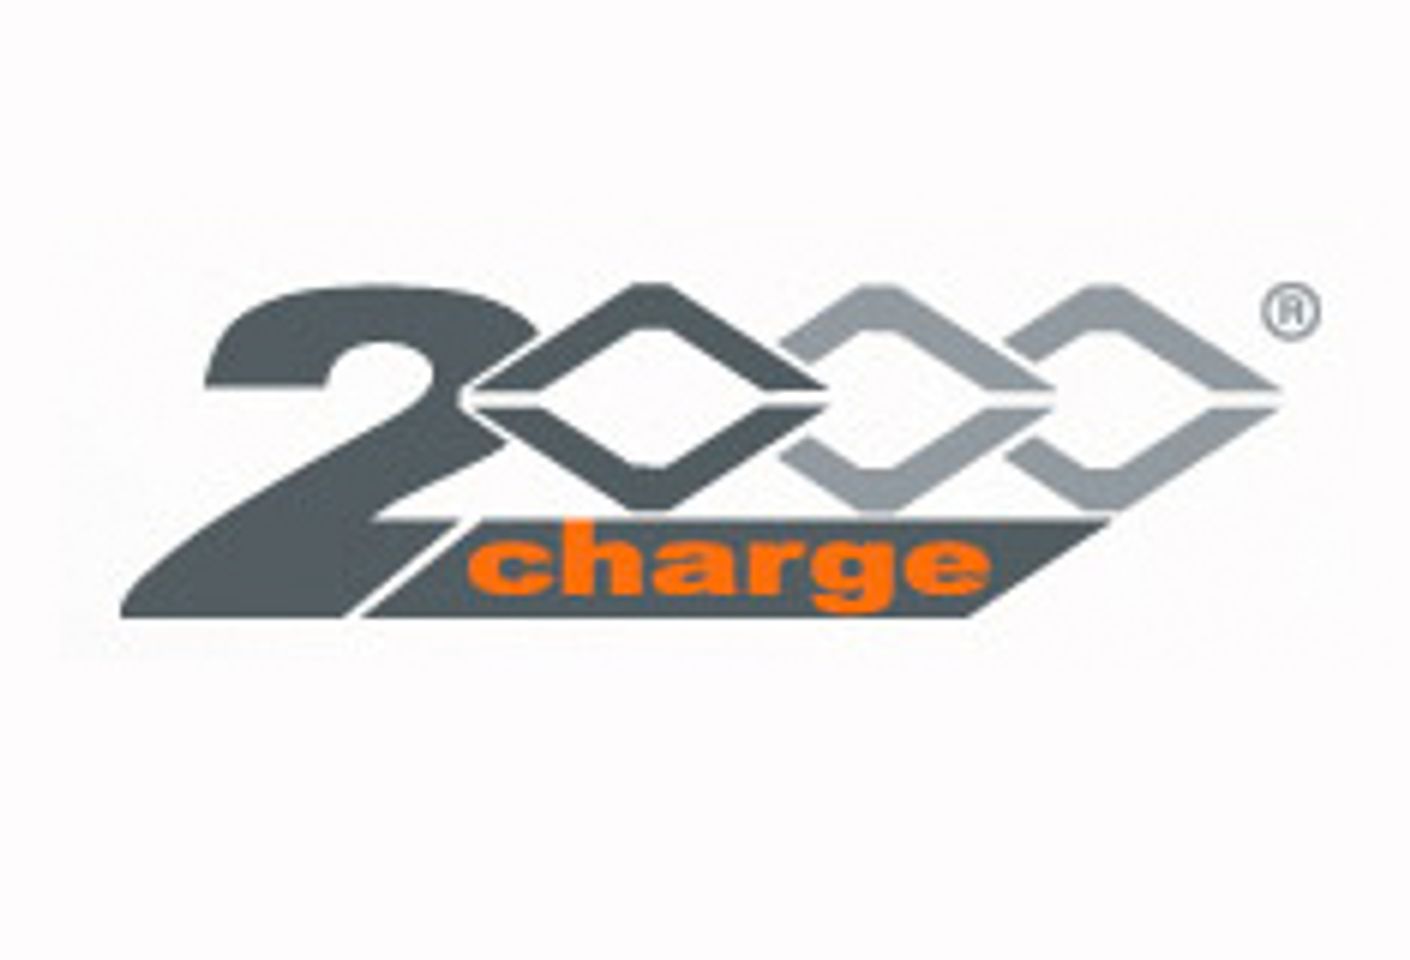 2000Charge Title Sponsor of Barcelona YNOT Grand Prix